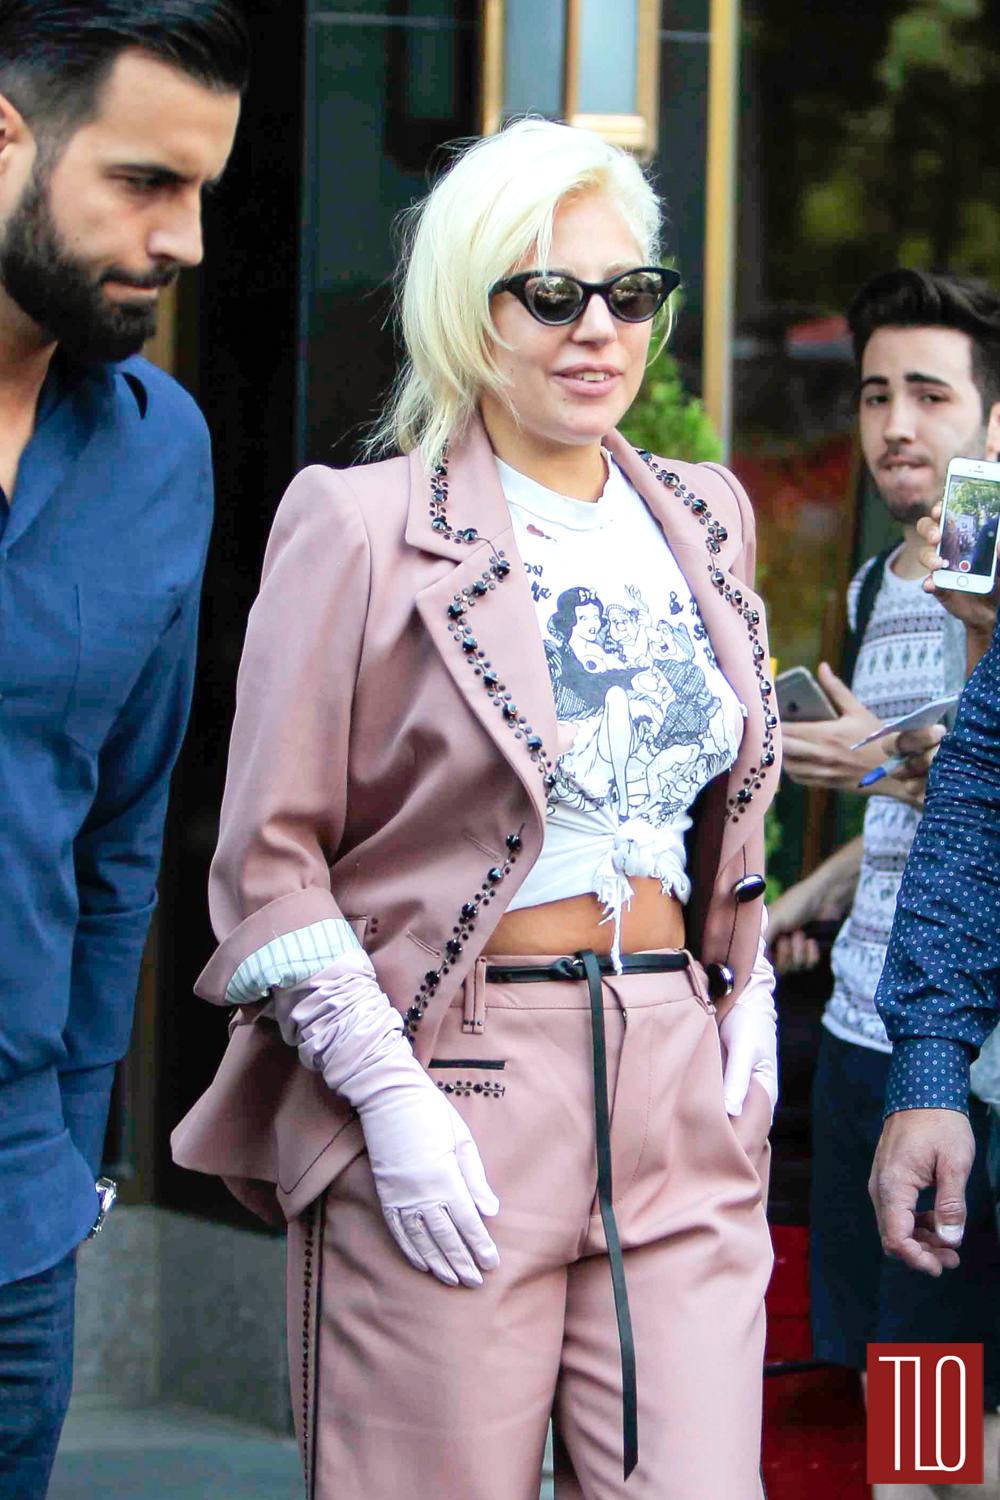 Lady-Gaga-GOTSNYC-Marc-Jacobs-Street-Style-Tom-Lorenzo-Site-TLO (1)